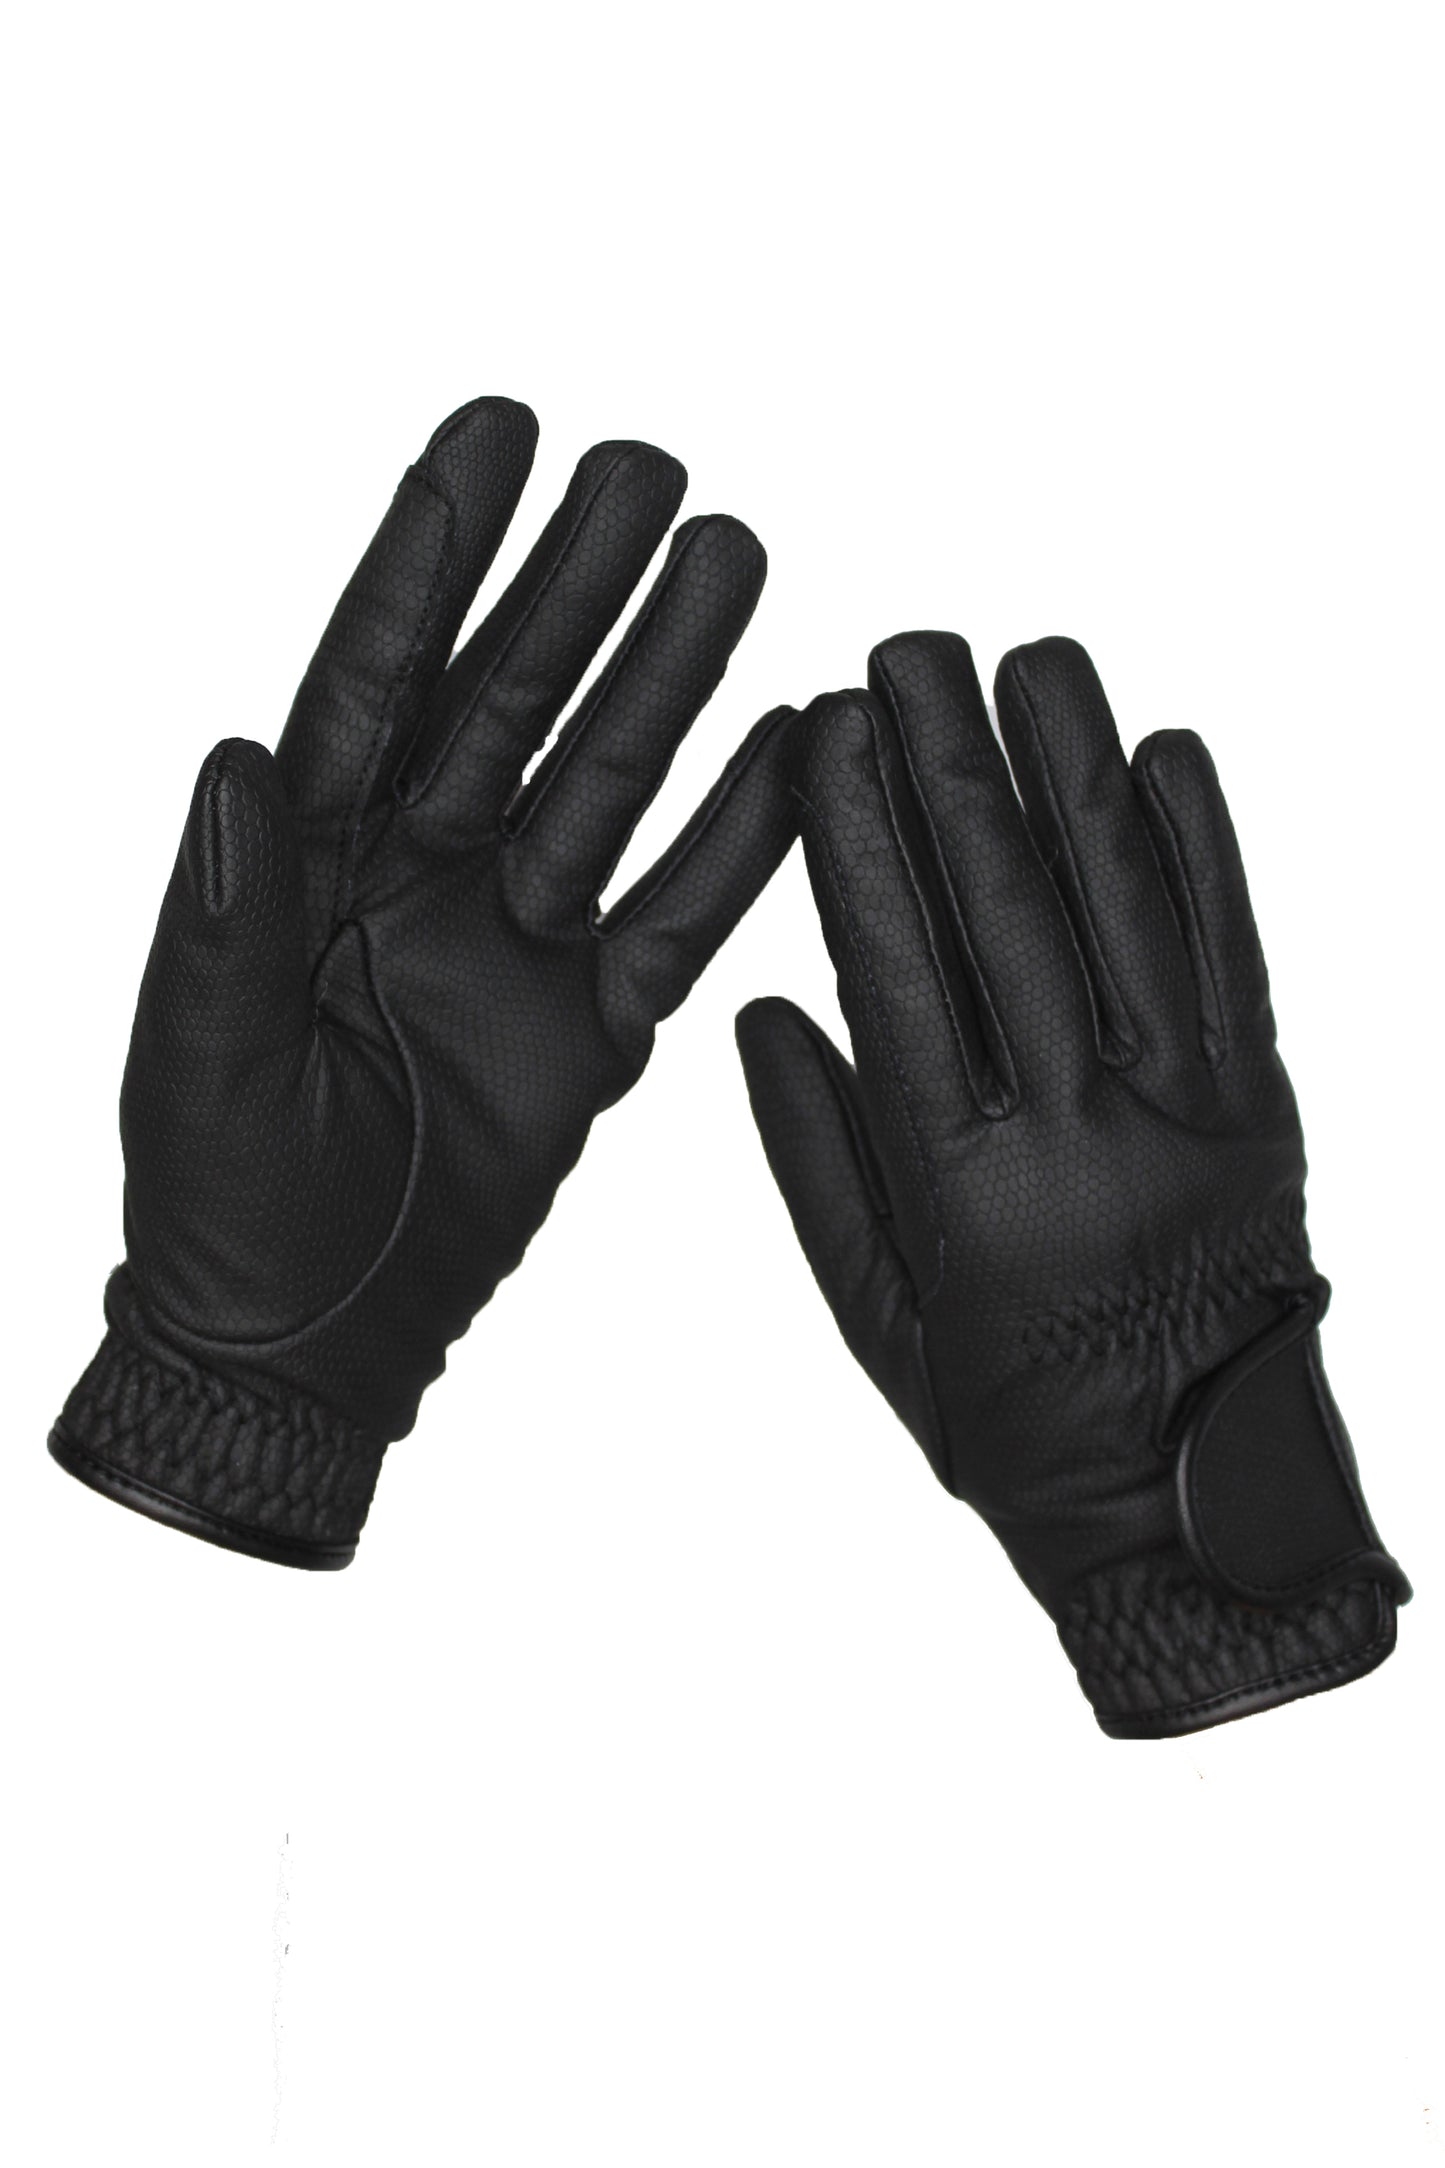 Hemsby Winter Riding Gloves